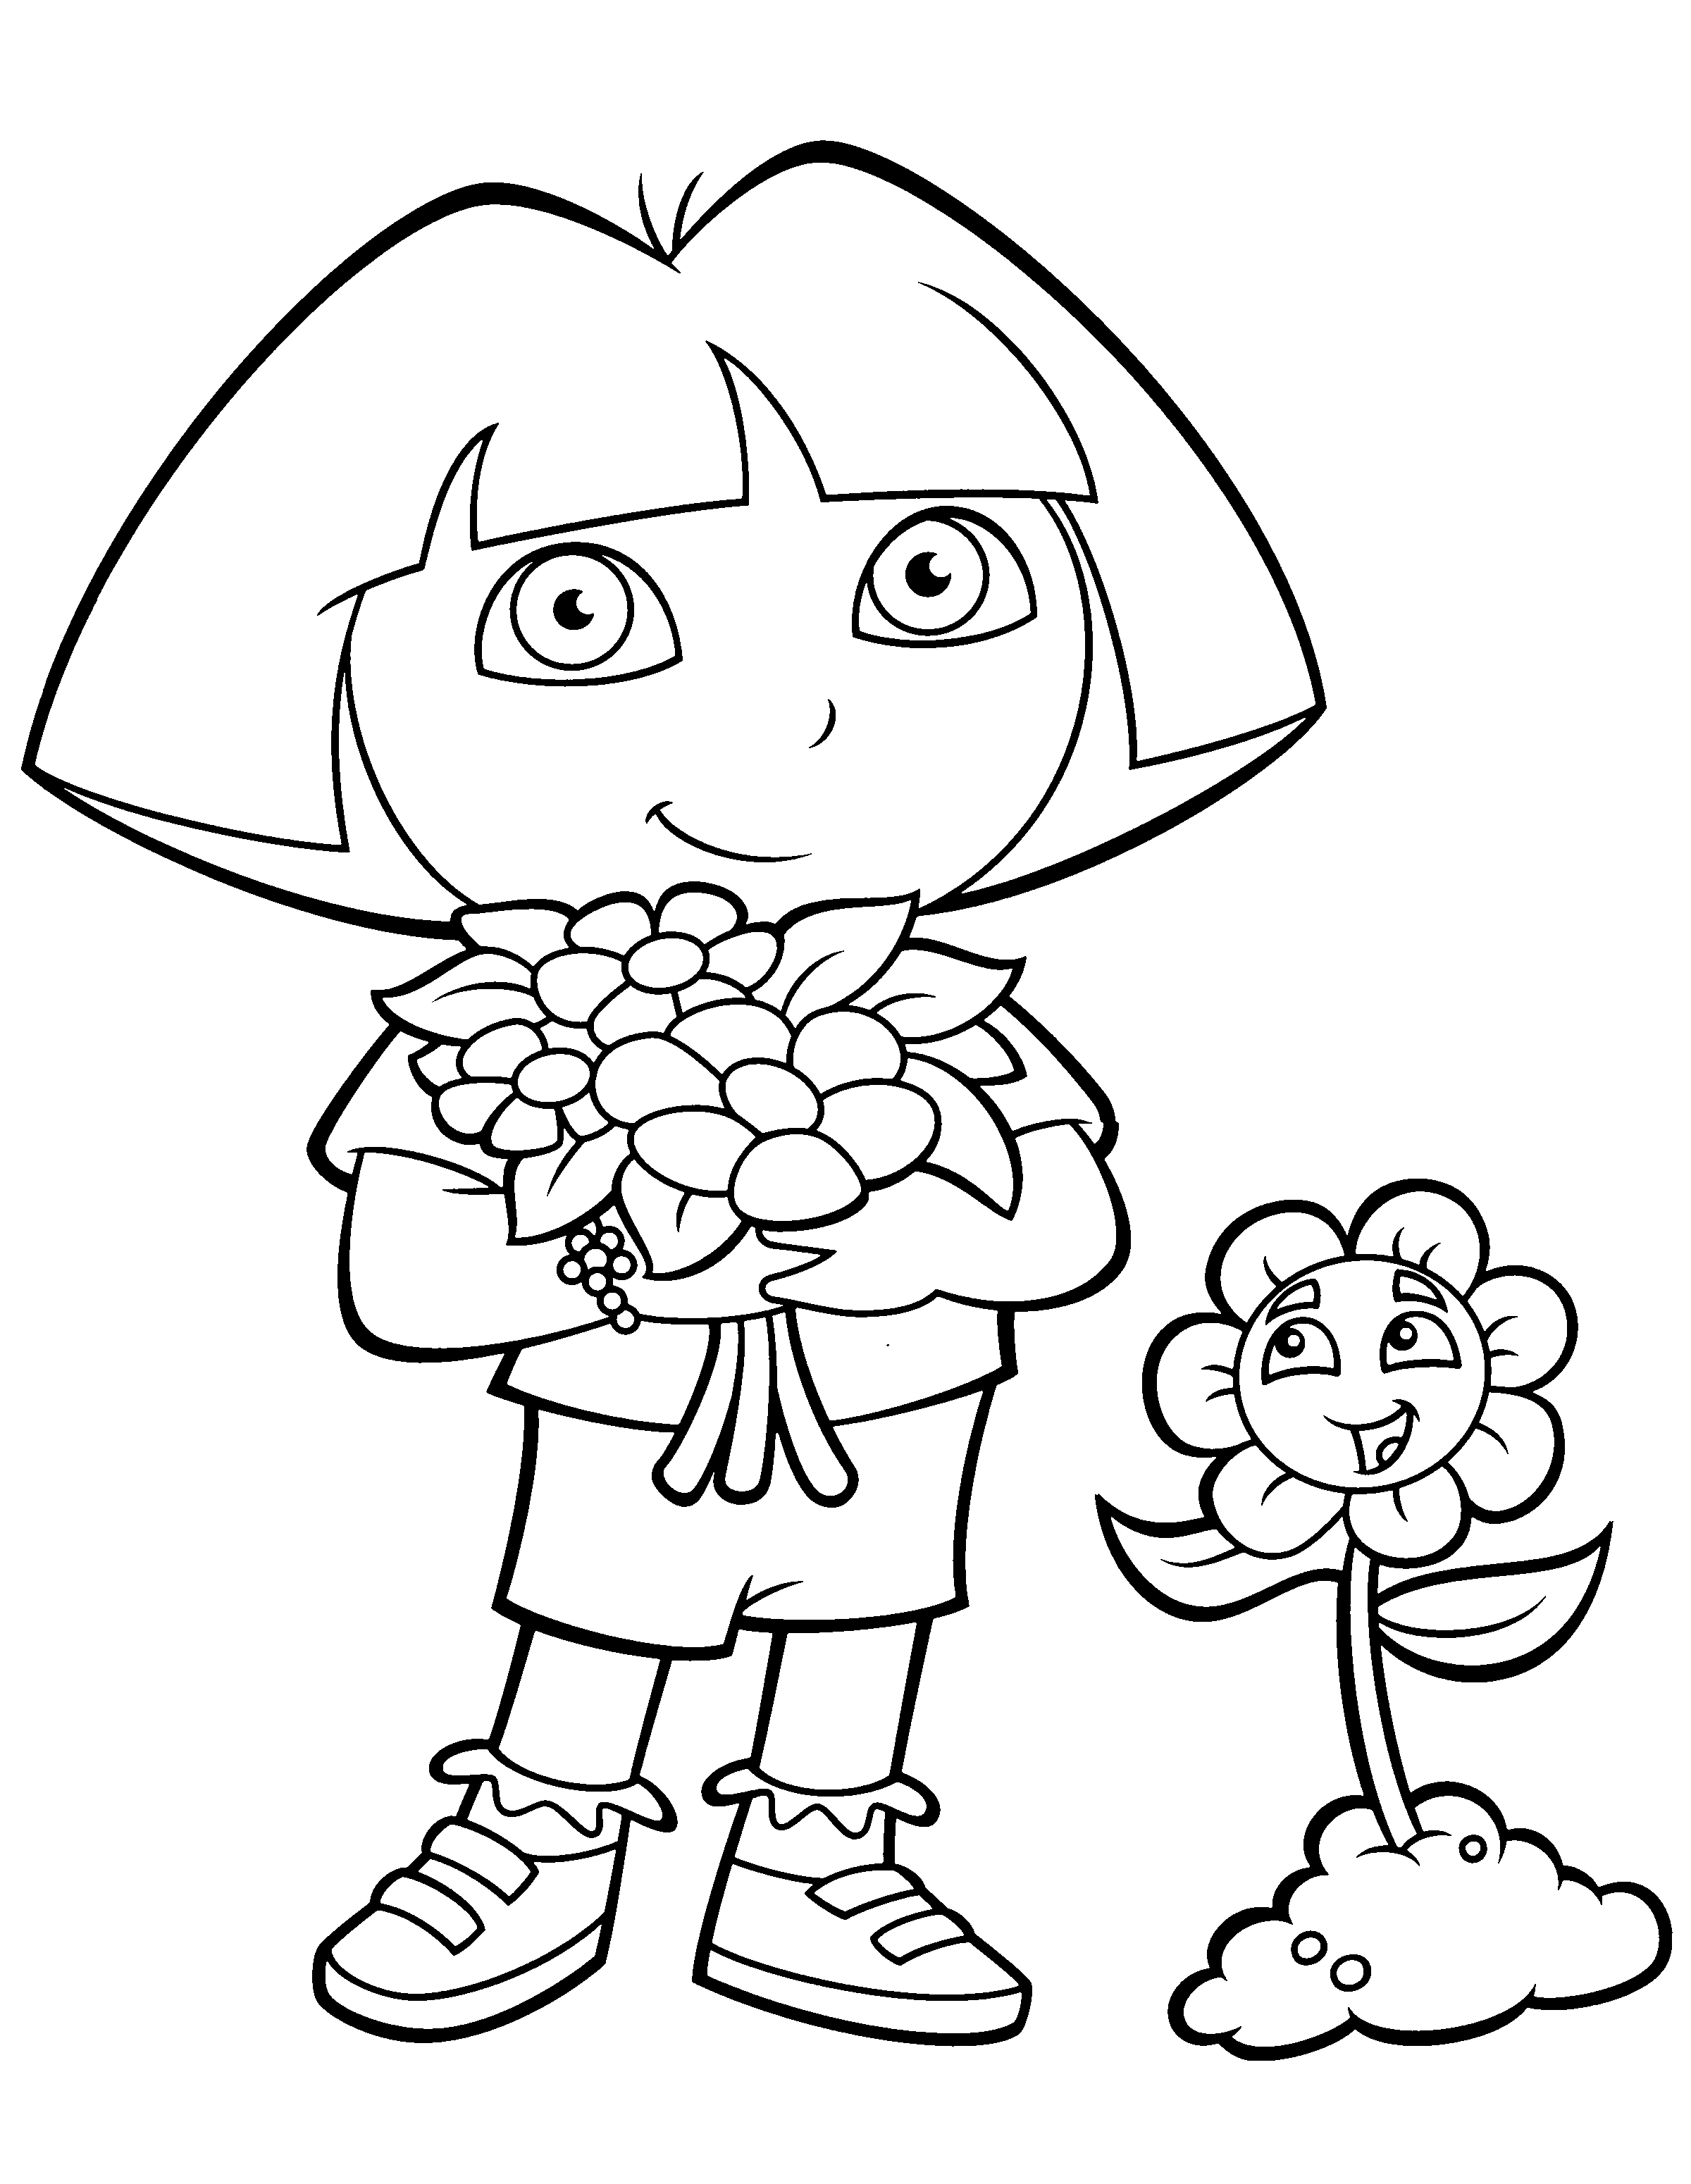 How to draw Dora the Explorer by Battou - Fanart Central